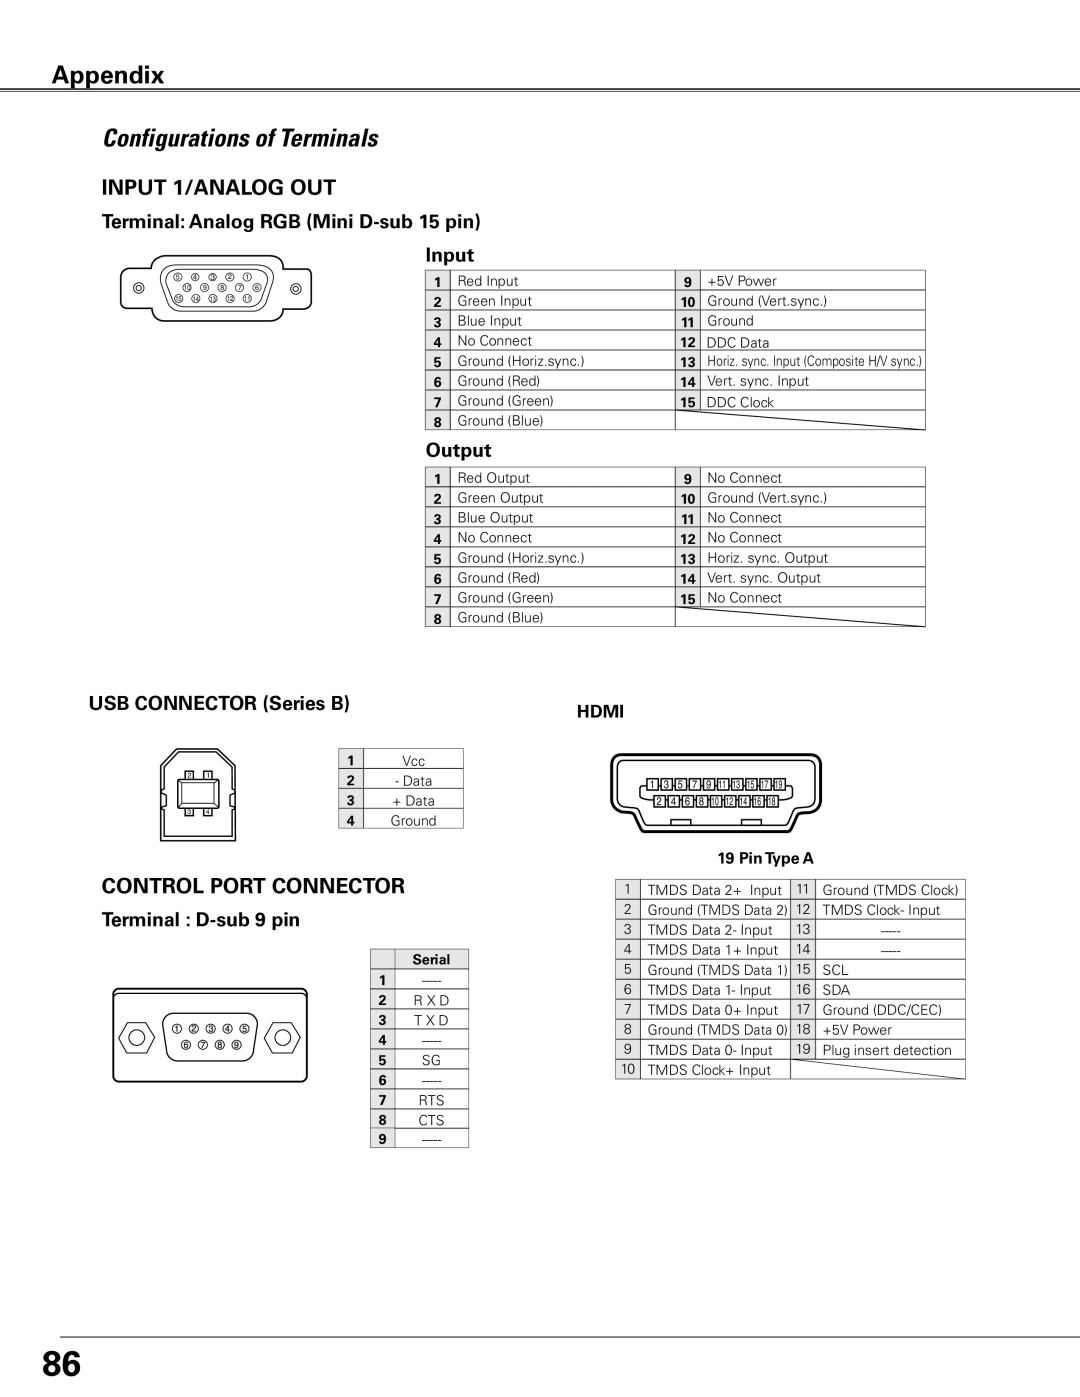 Sanyo WTC500L Configurations of Terminals, Appendix, Terminal: Analog RGB Mini D-sub15 pin Input, Pin Type A, Serial 